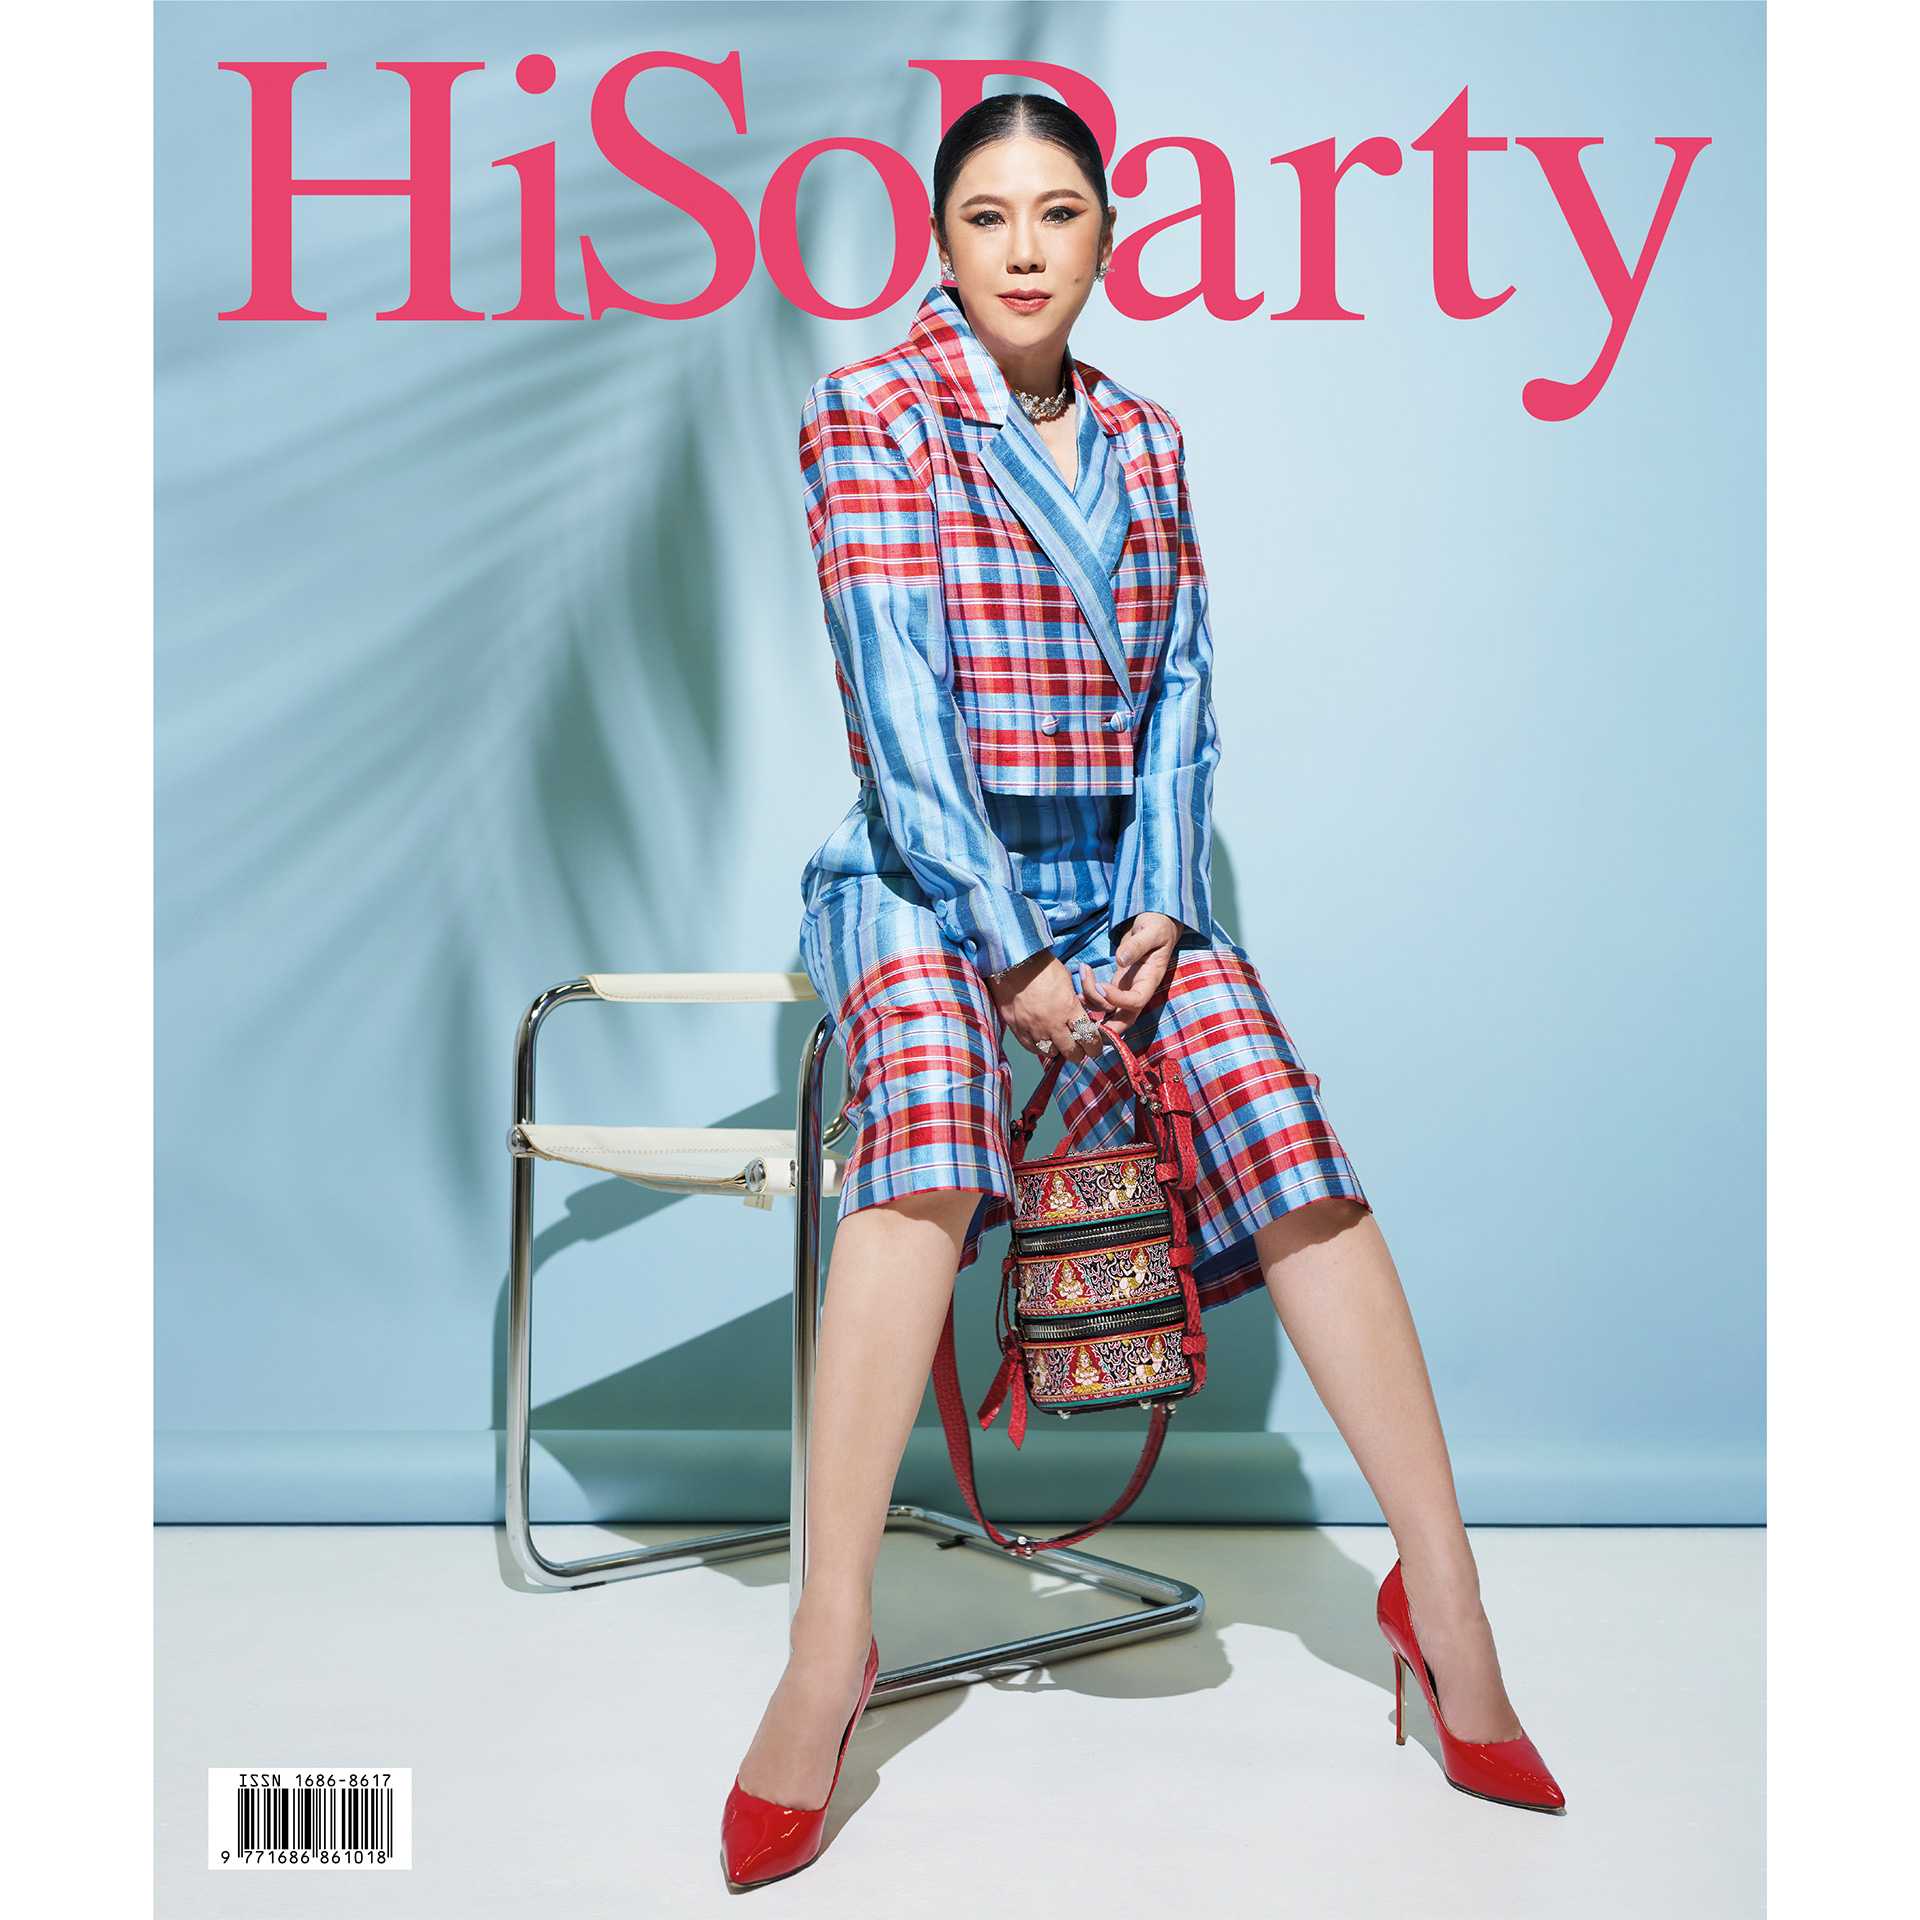 HiSoParty Magazine Vol.19 Issue 12 - 04/24 ฉบับเดือนเมษายน 2567